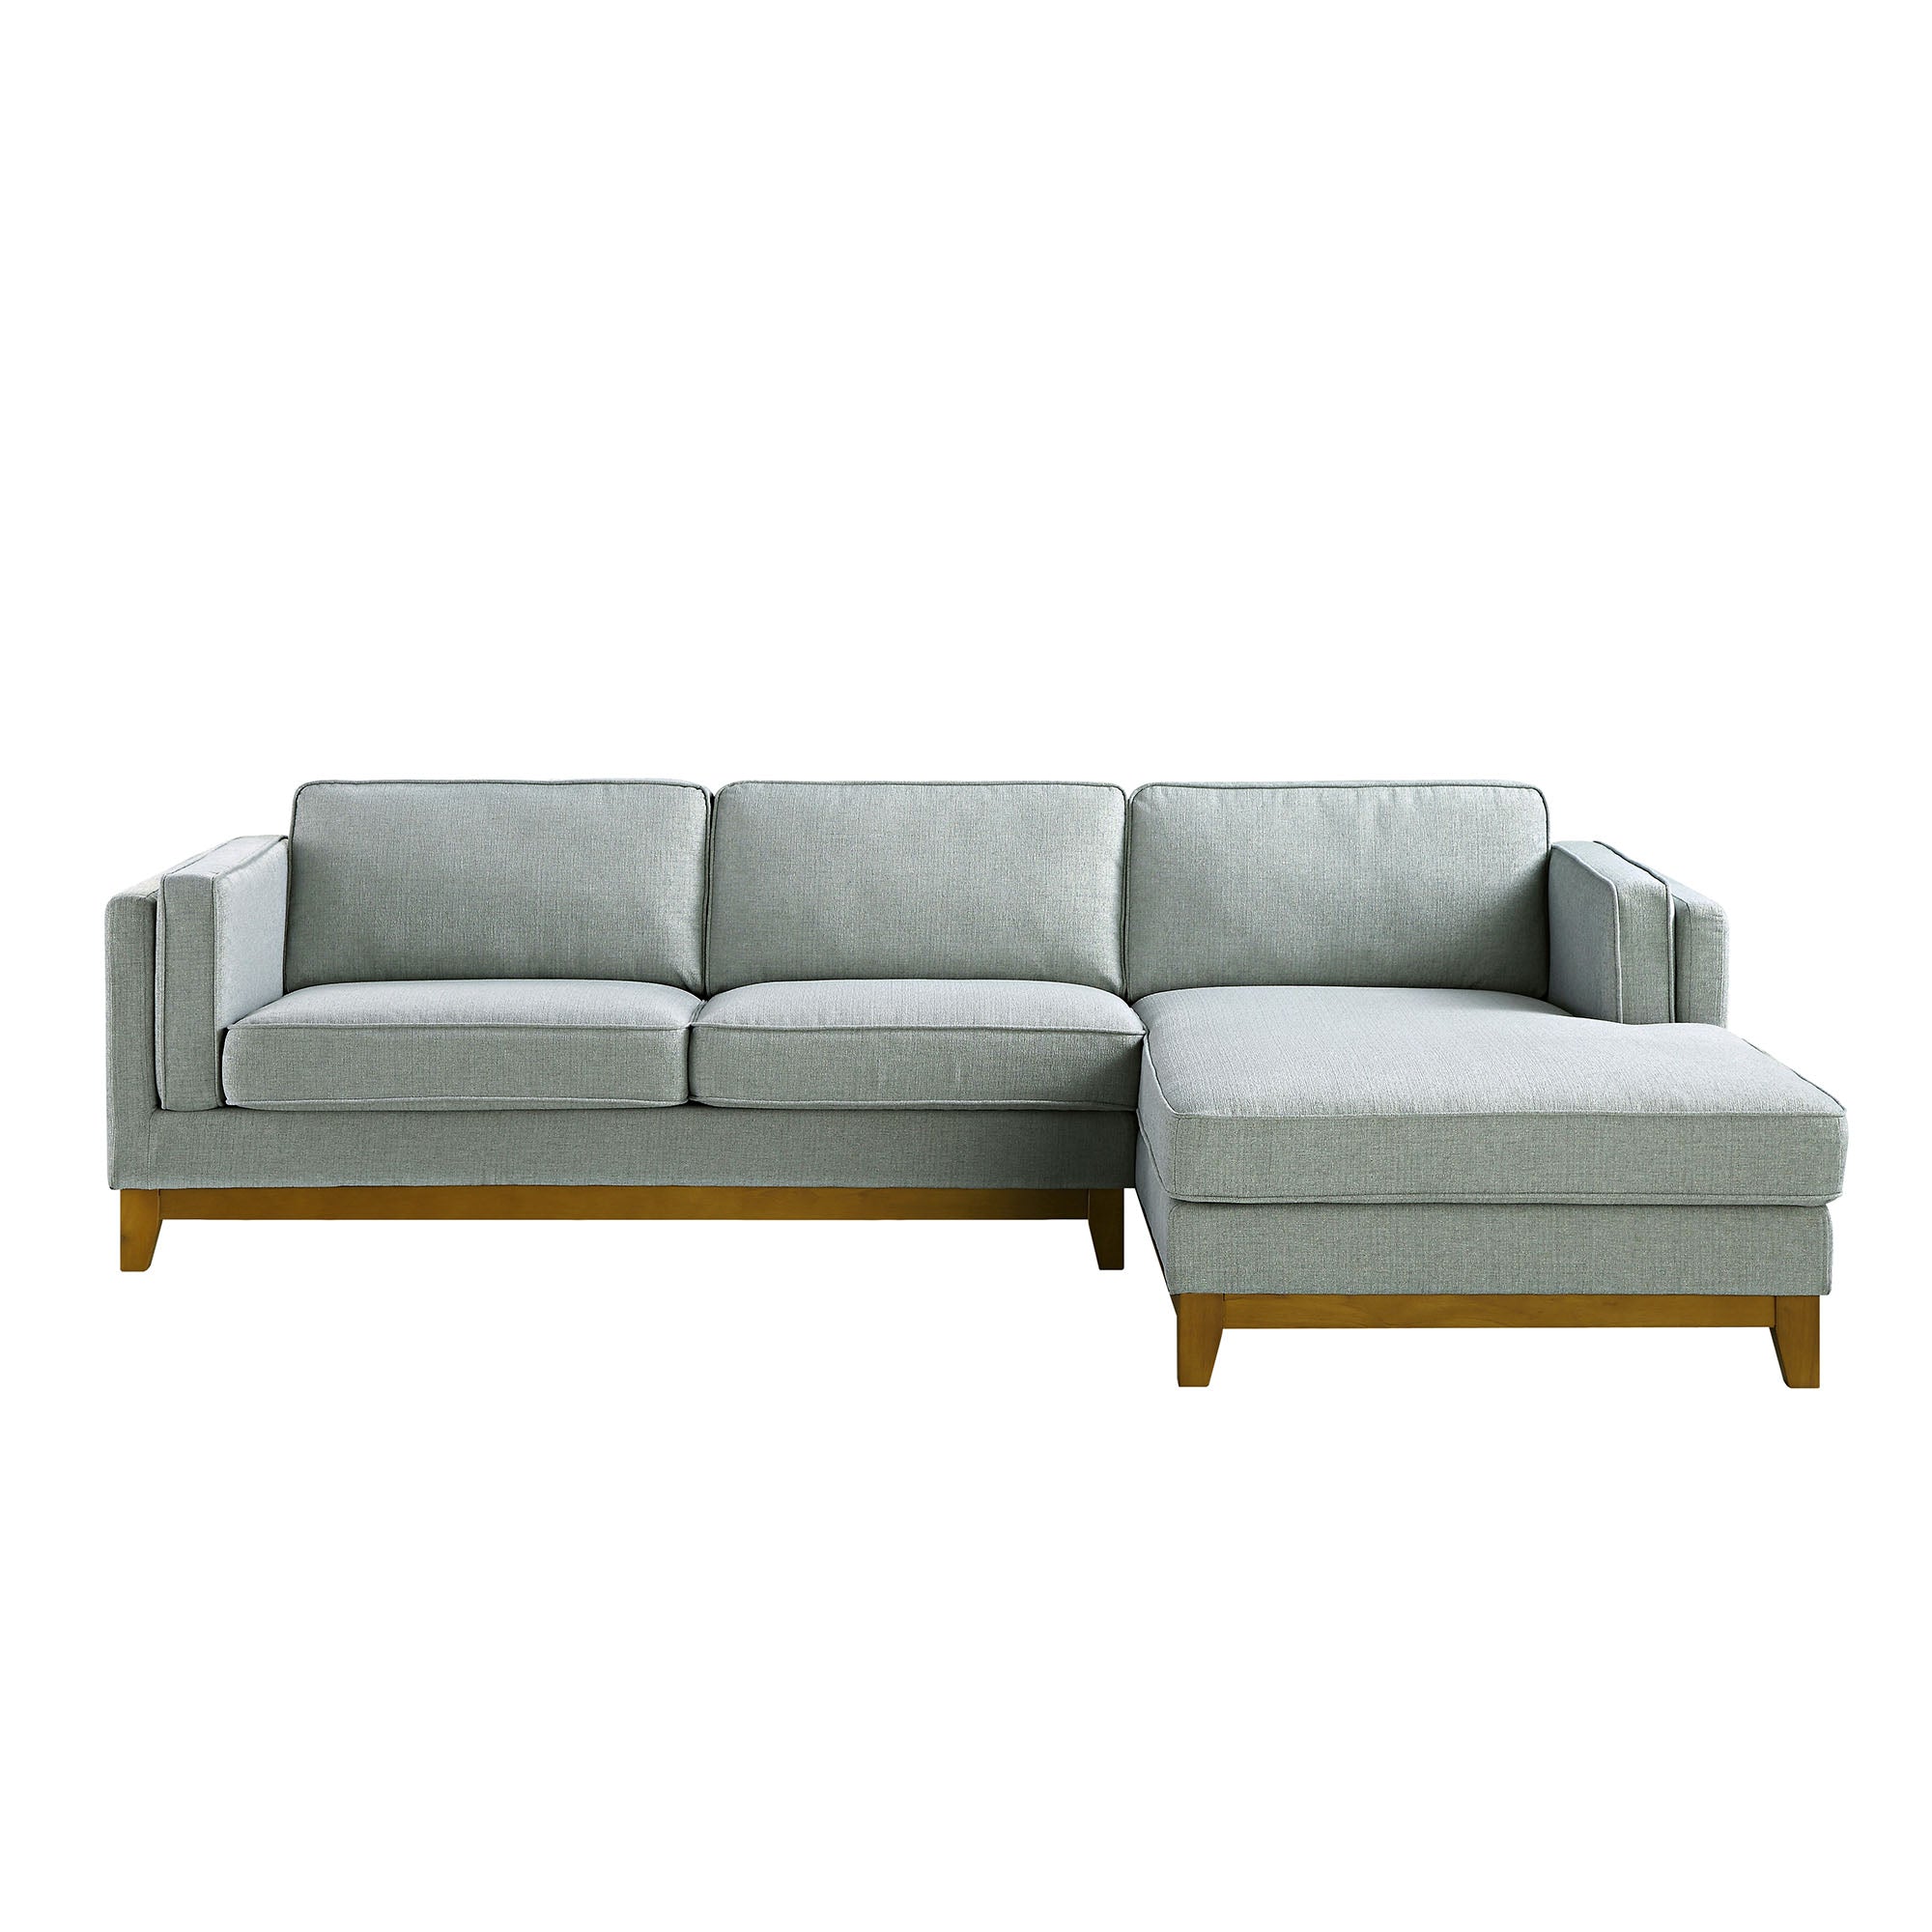 Dipley Sage Woven Fabric Sofa, Grande Chaise Sofa Right Hand